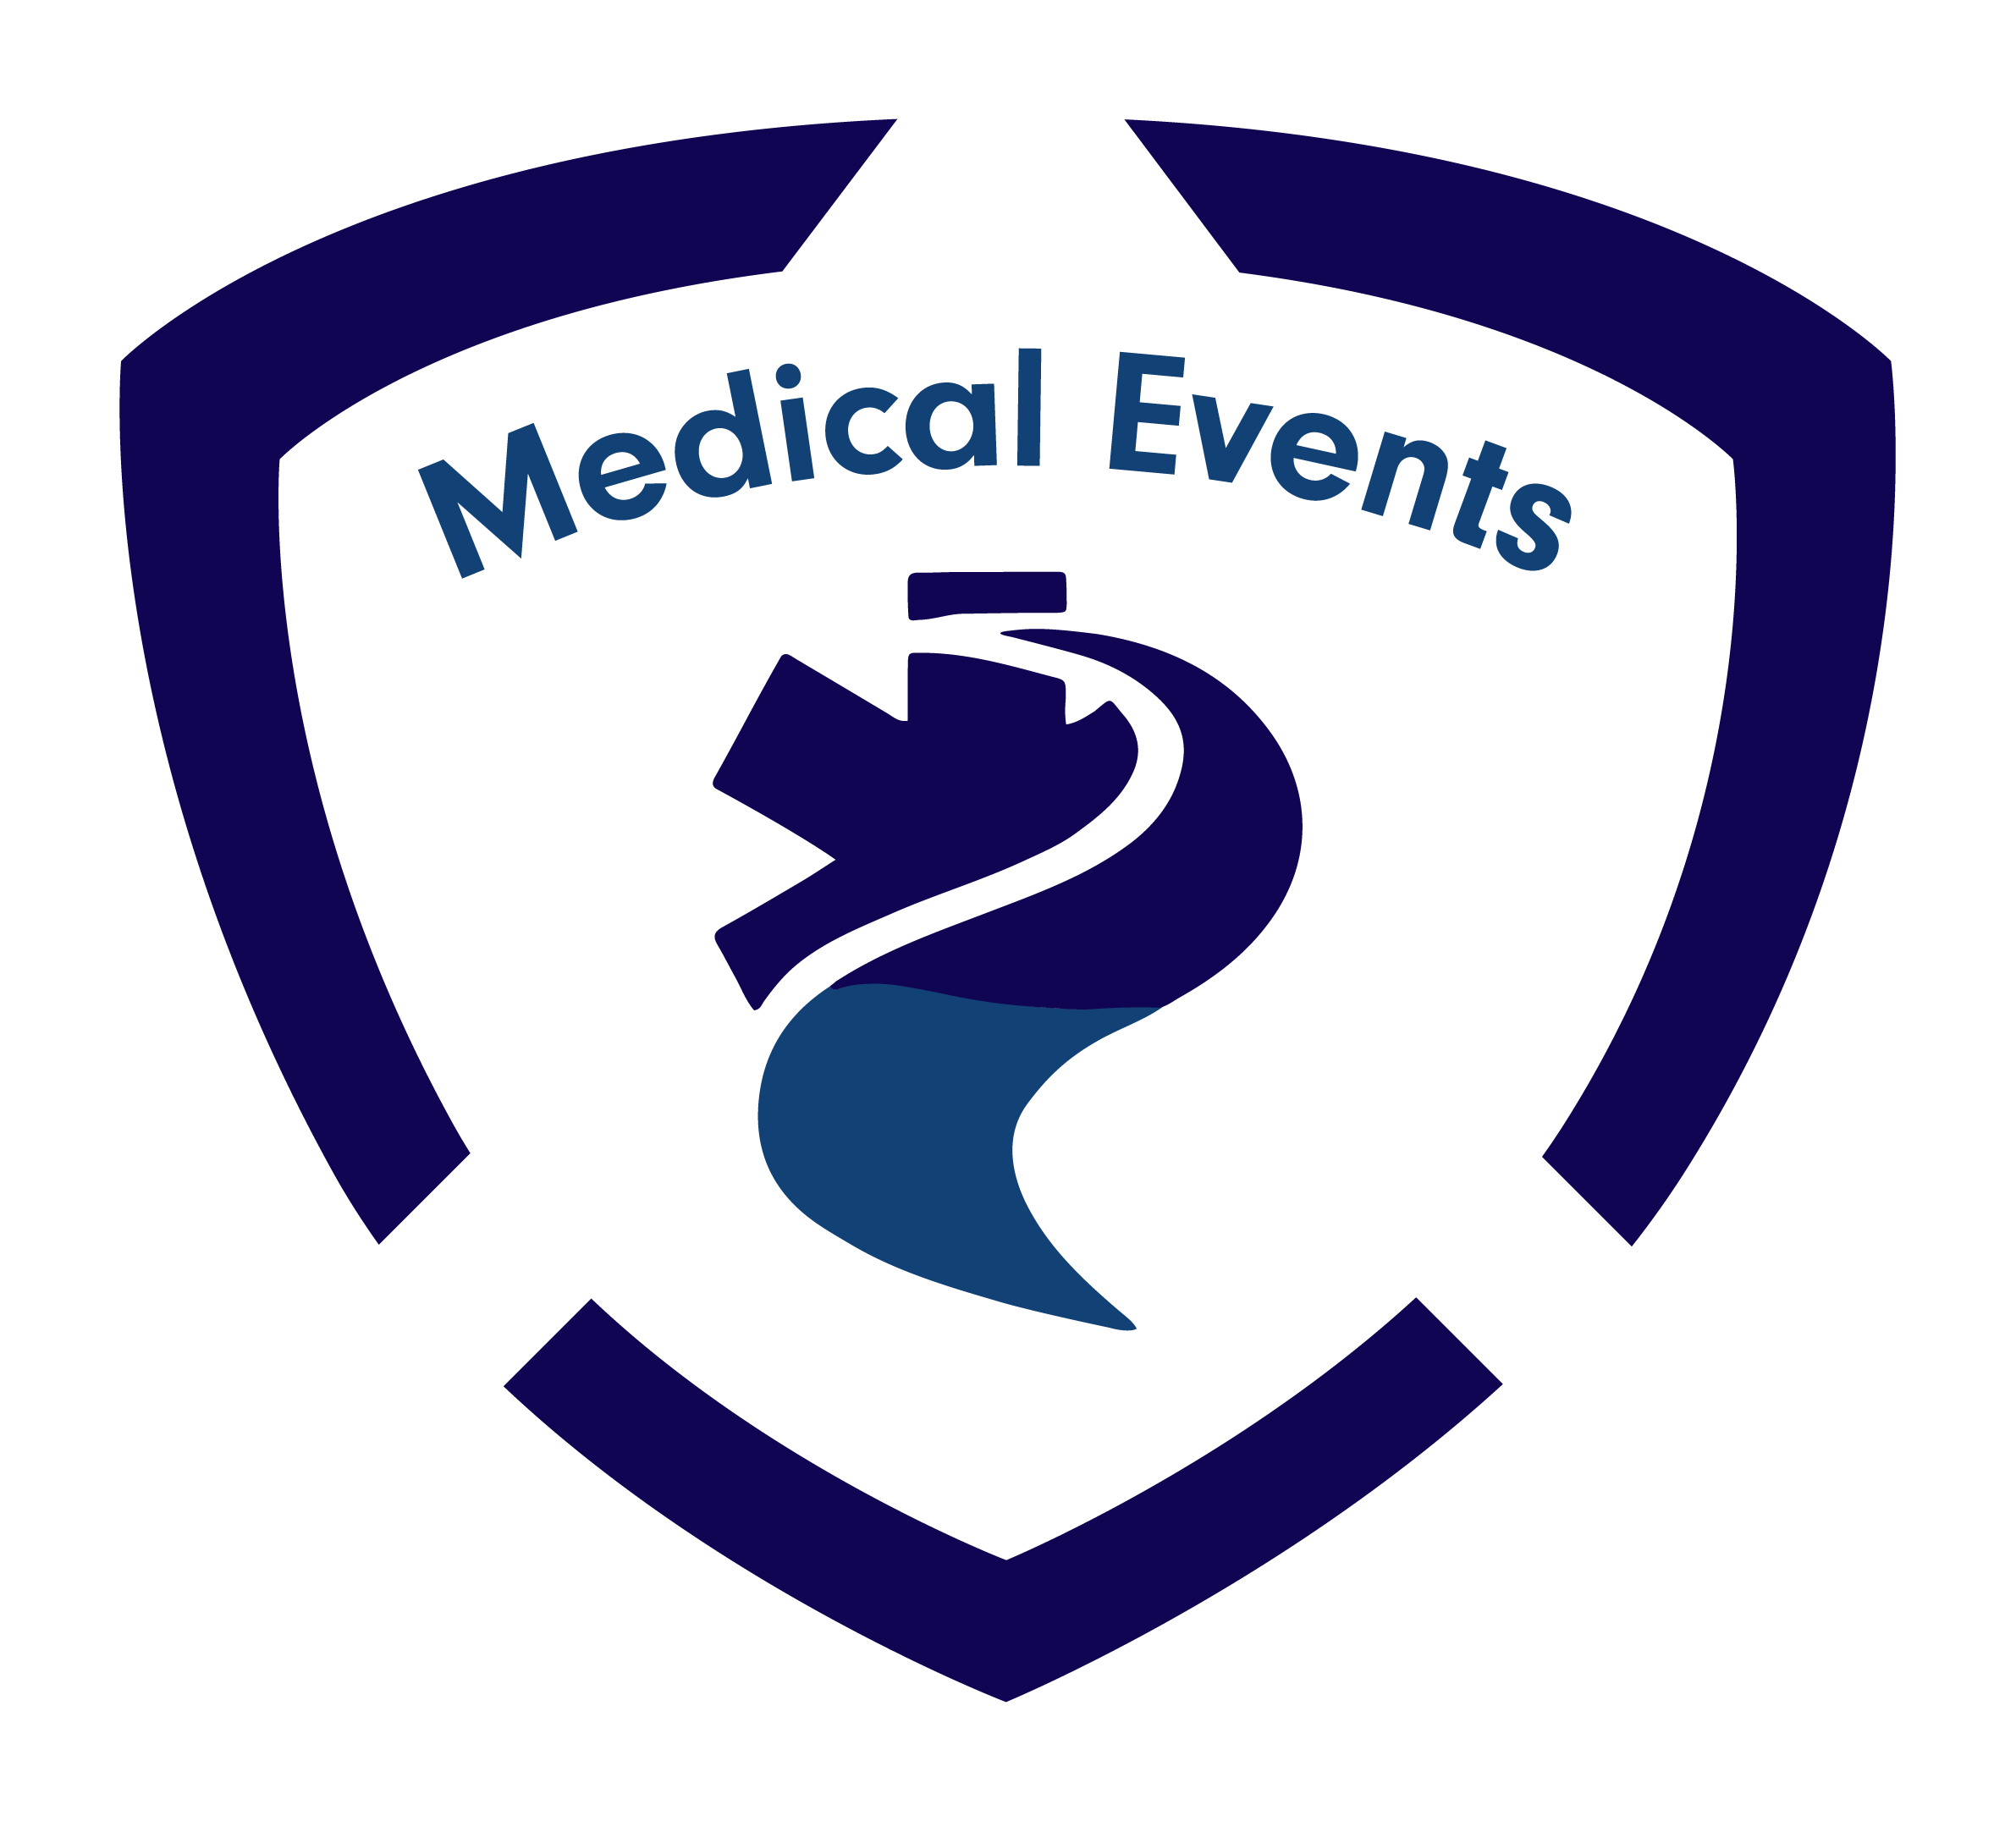 Medical Events